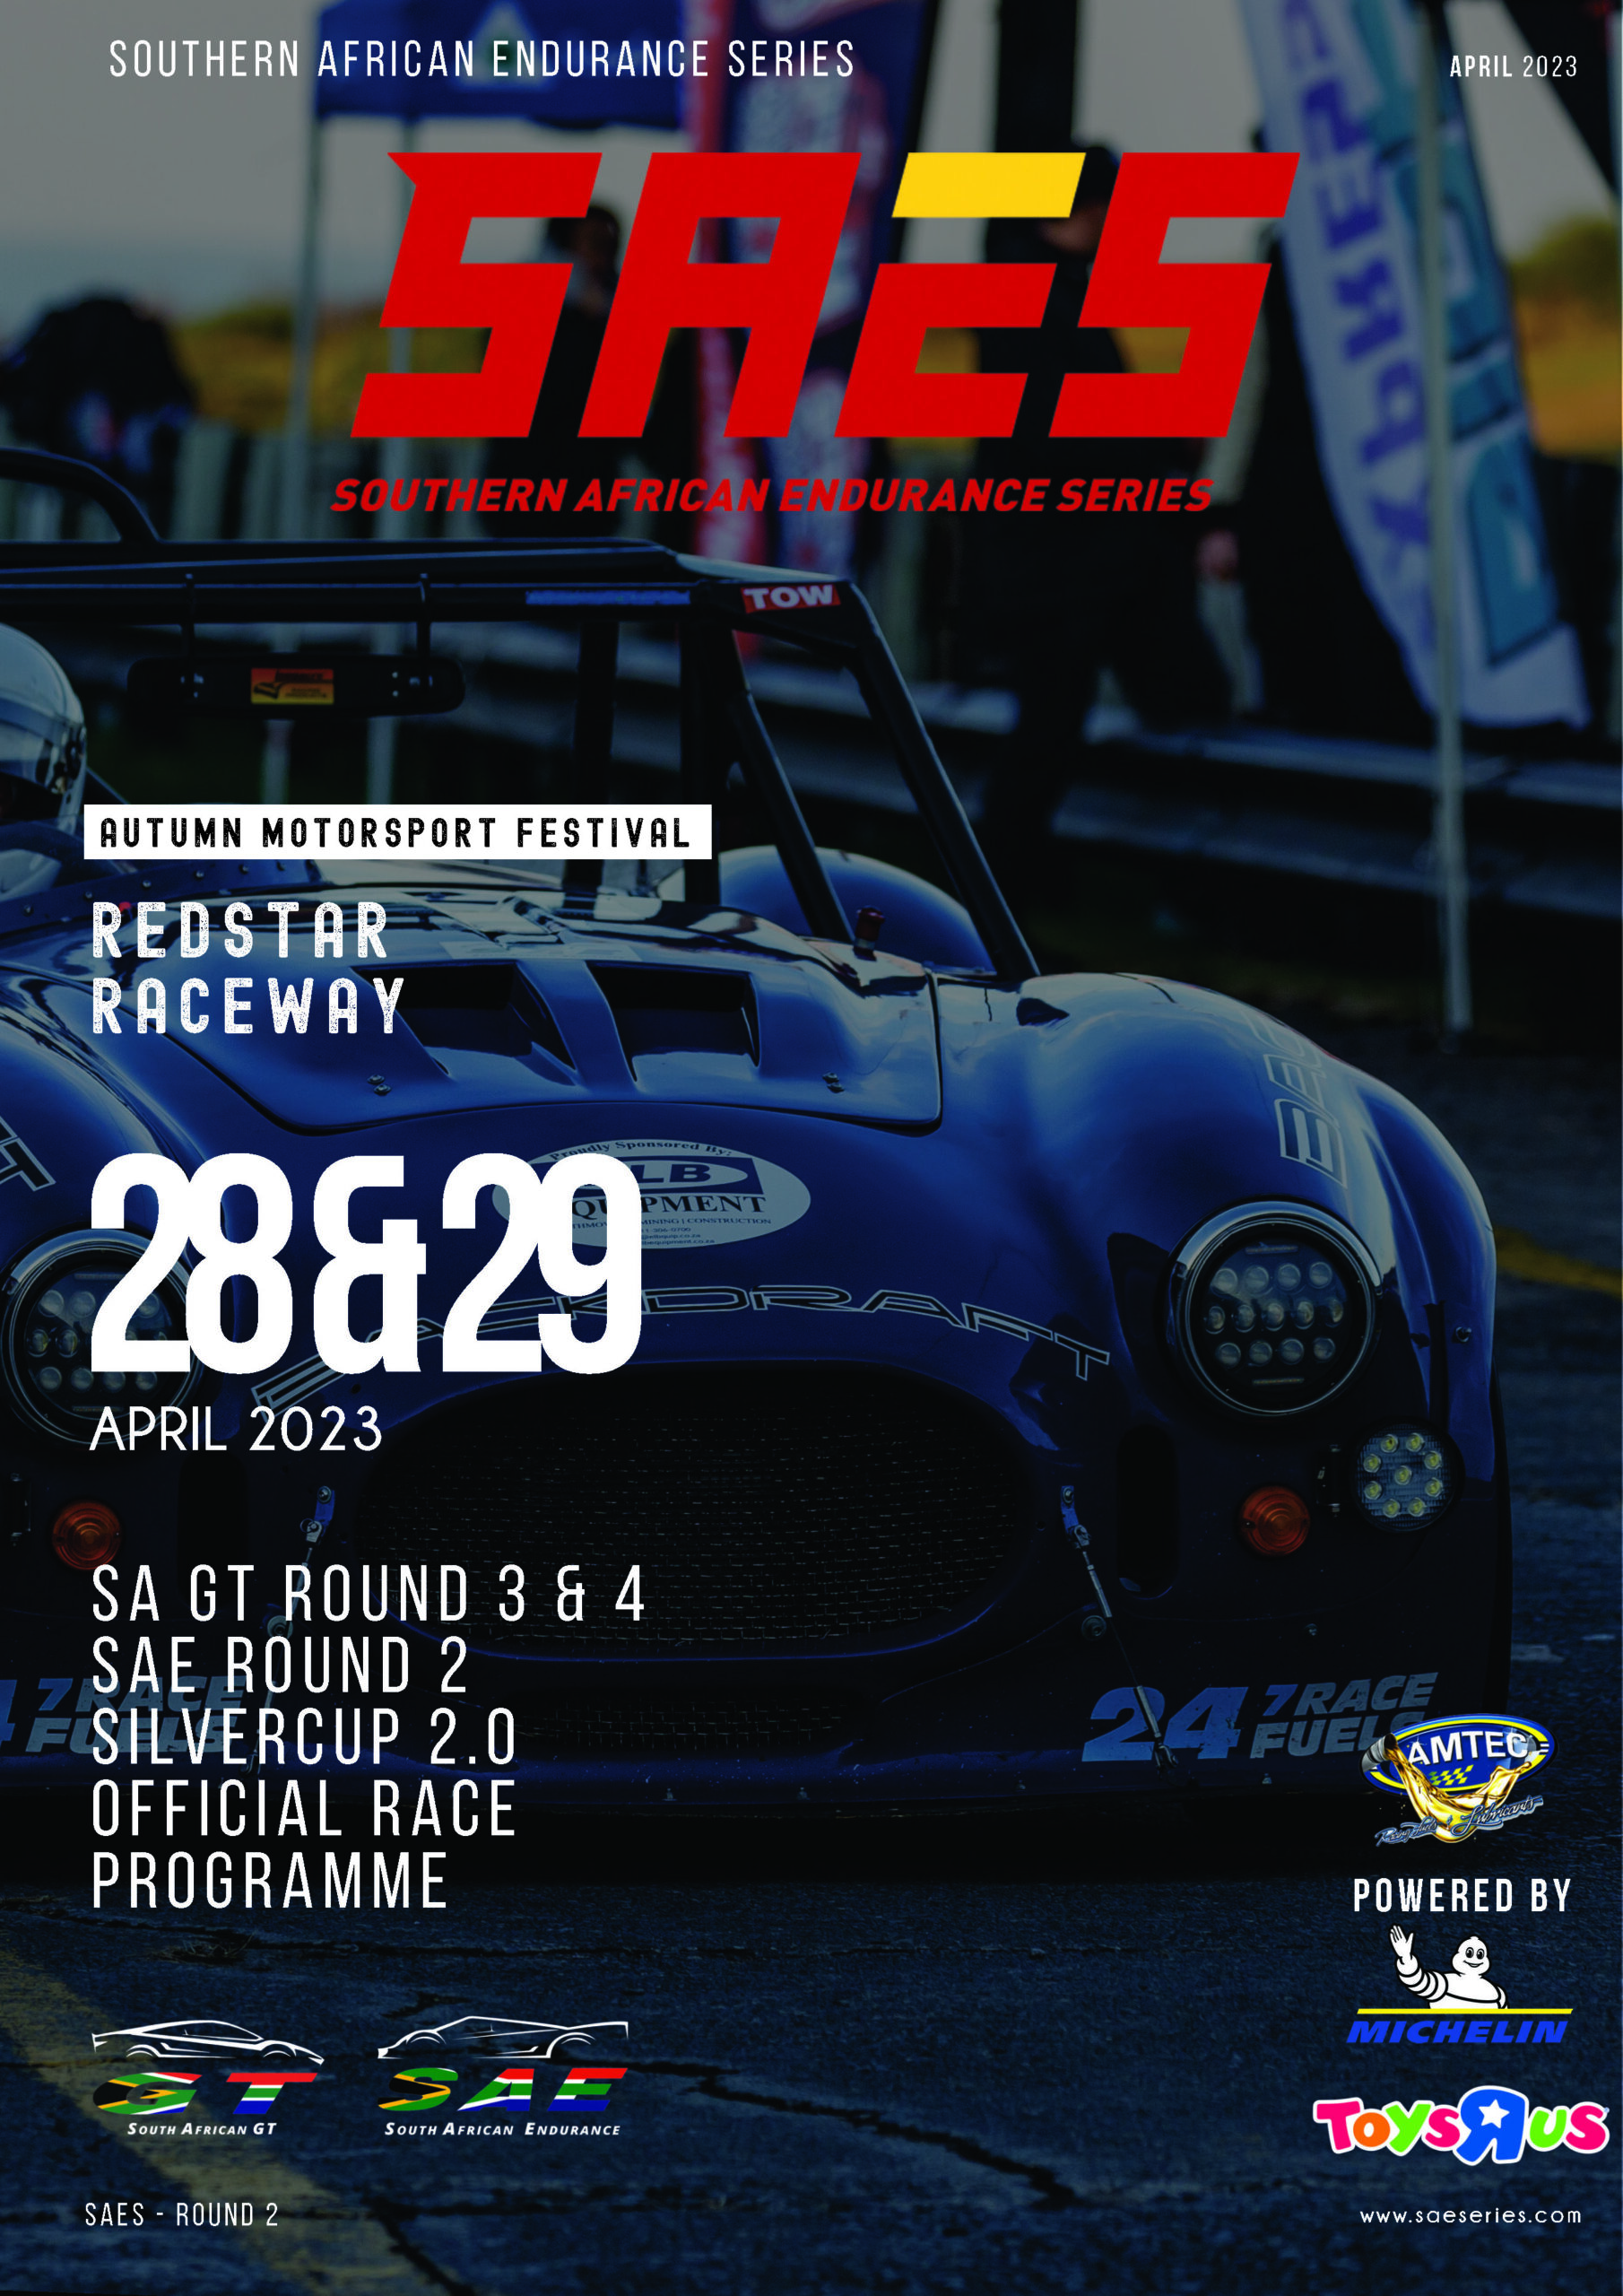 Race Magazine